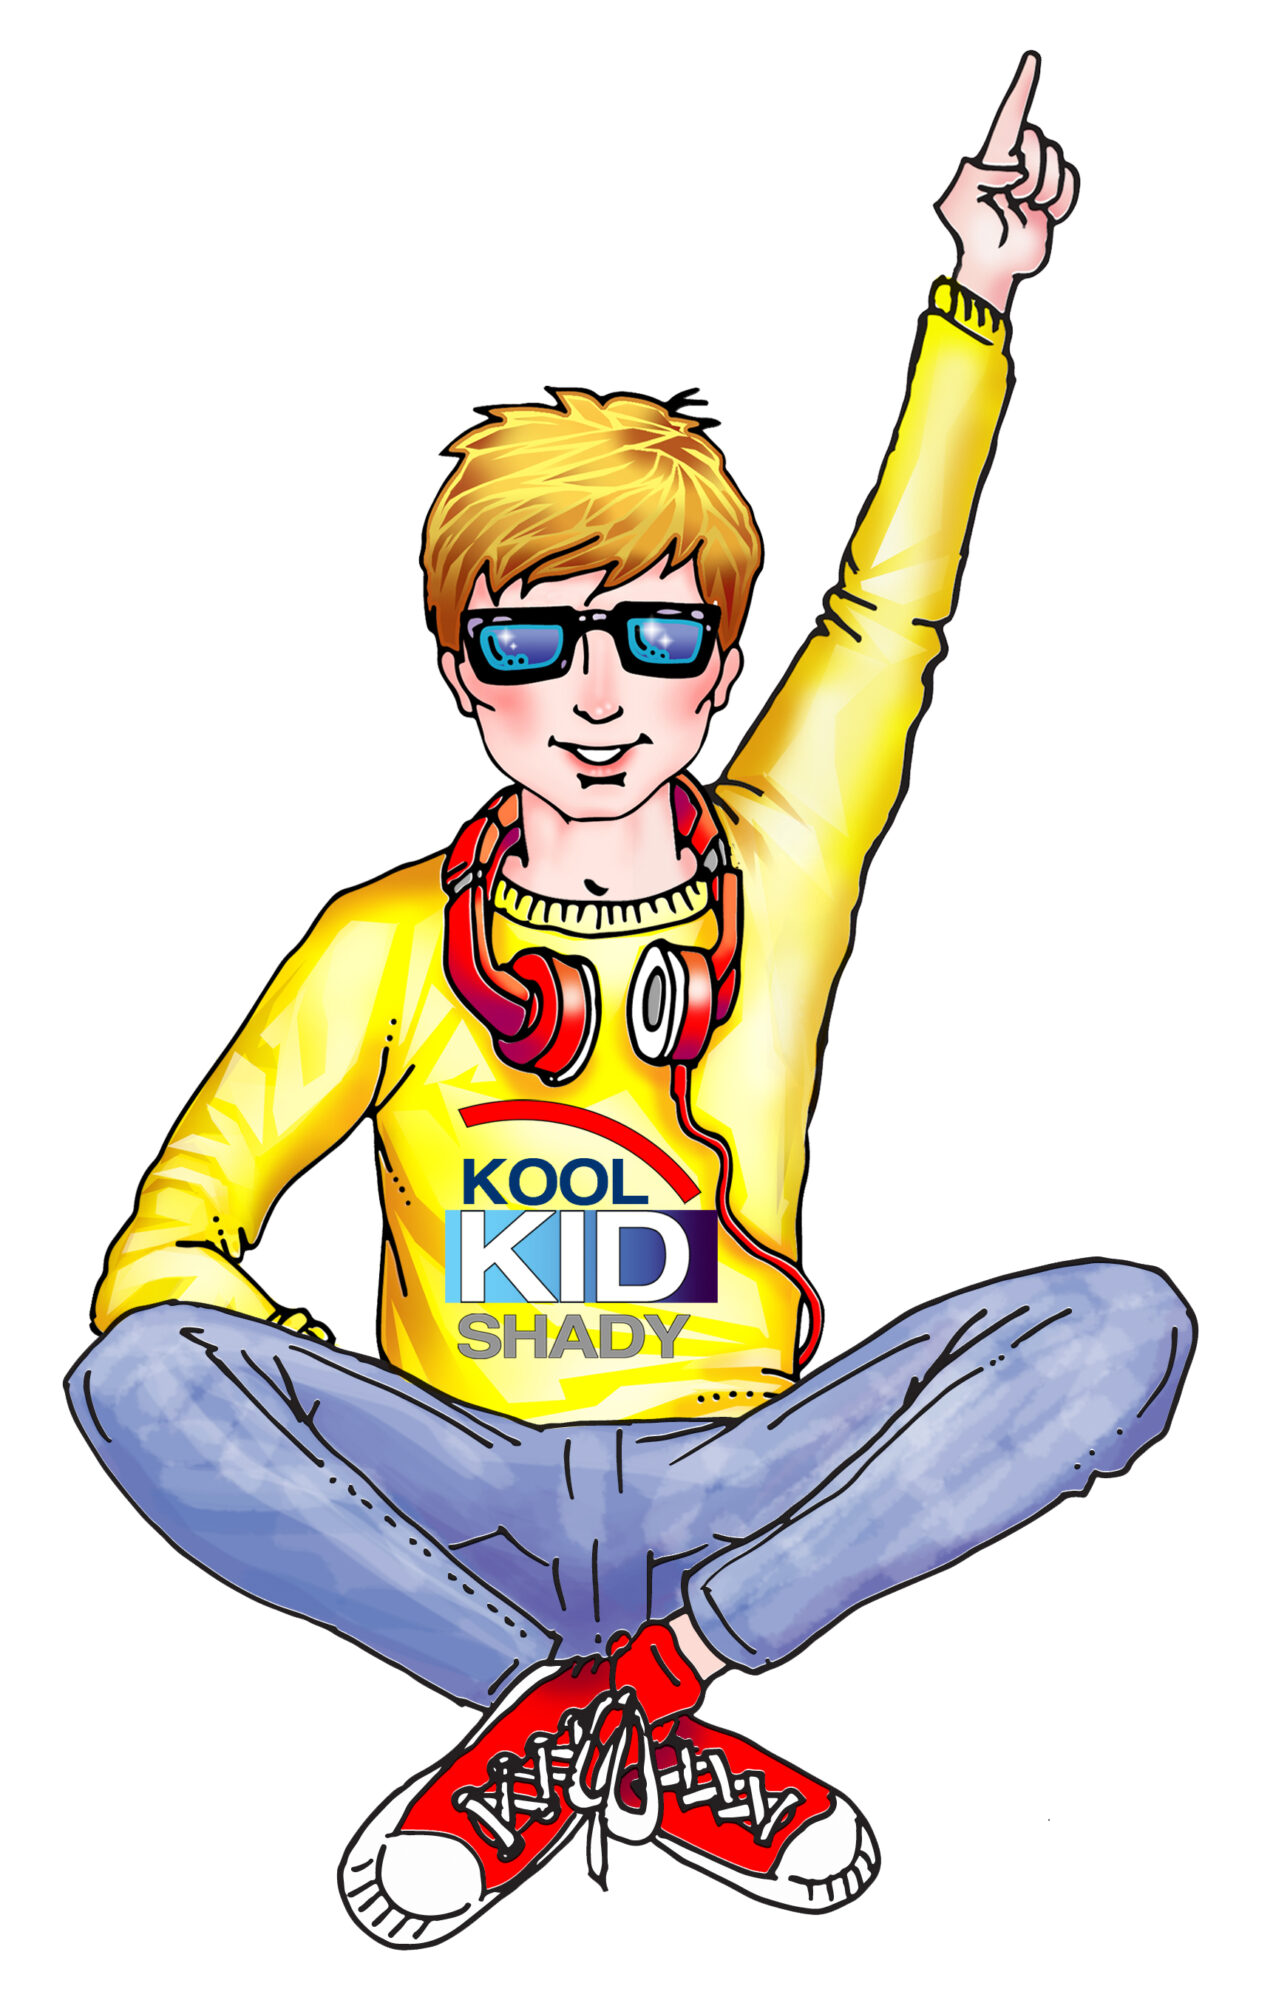 Design your customized KOOL KID SHADY  SYSTEM!